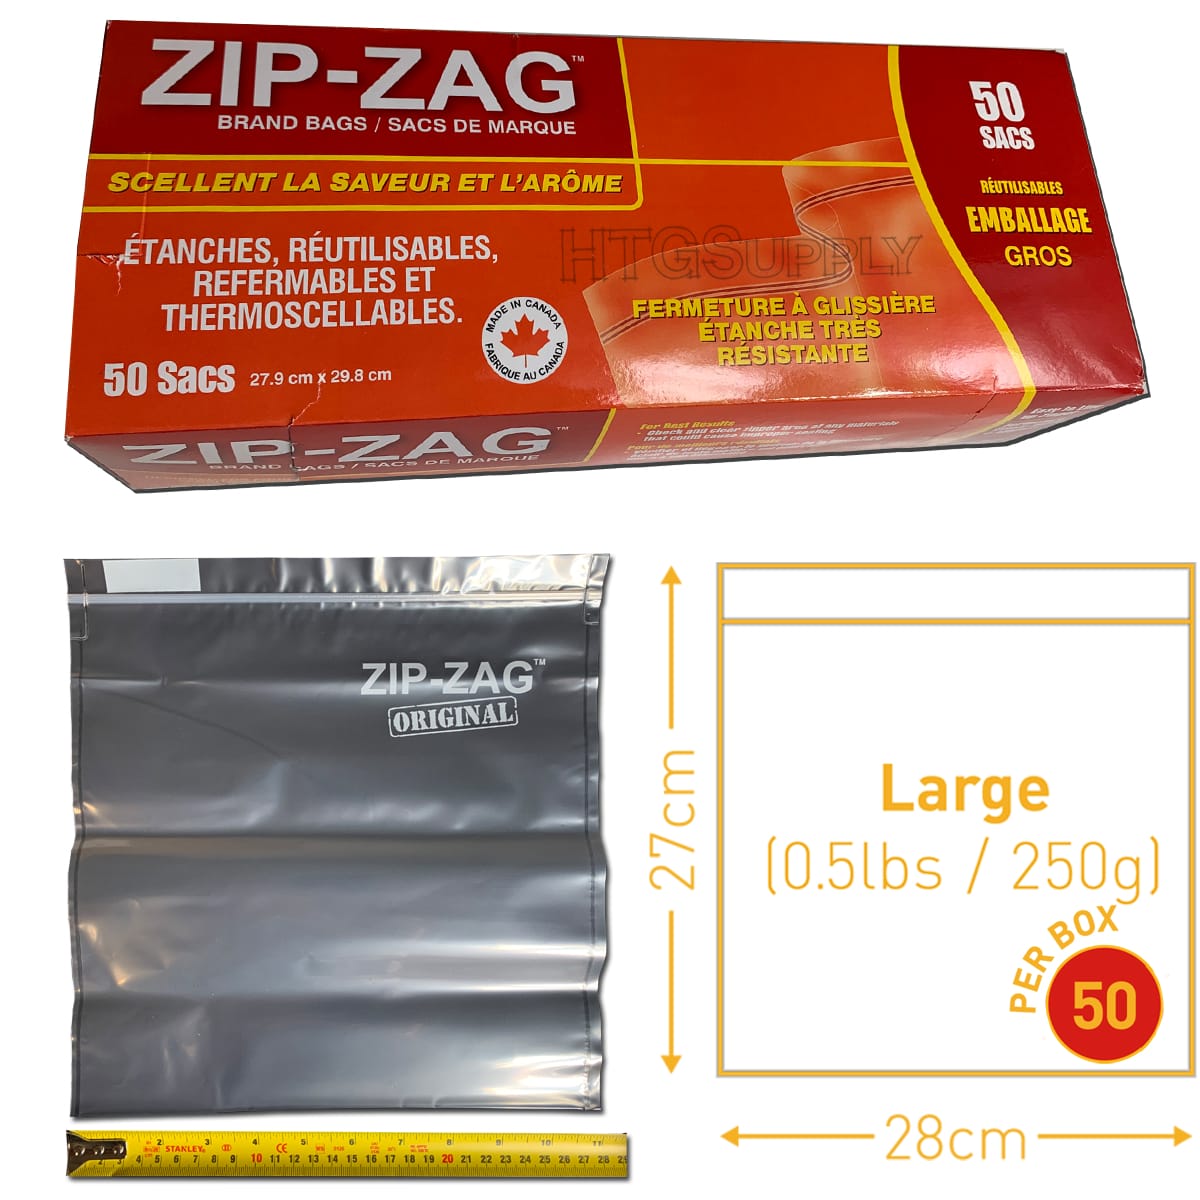 https://e36jokz4maw.exactdn.com/wp-content/uploads/2020/04/Zip-Zag-Large-50pack.jpg?strip=all&lossy=1&ssl=1